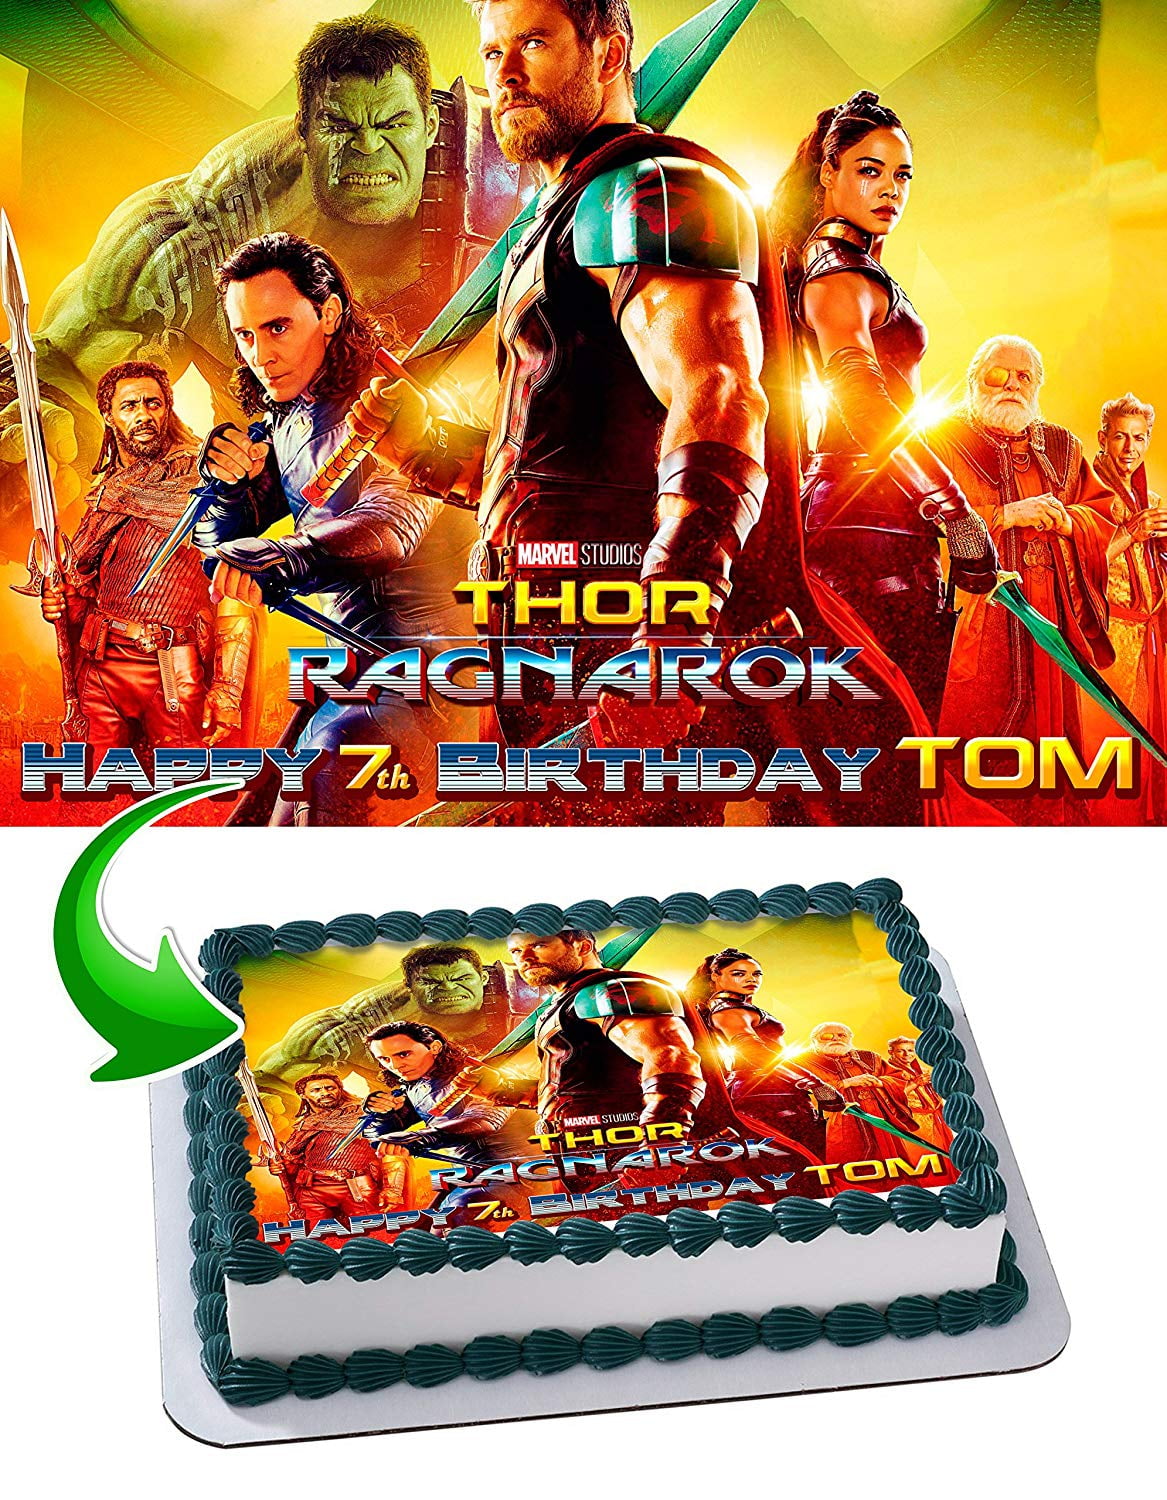 Mamma cakes - Thor Ragnarok theme cake | Facebook